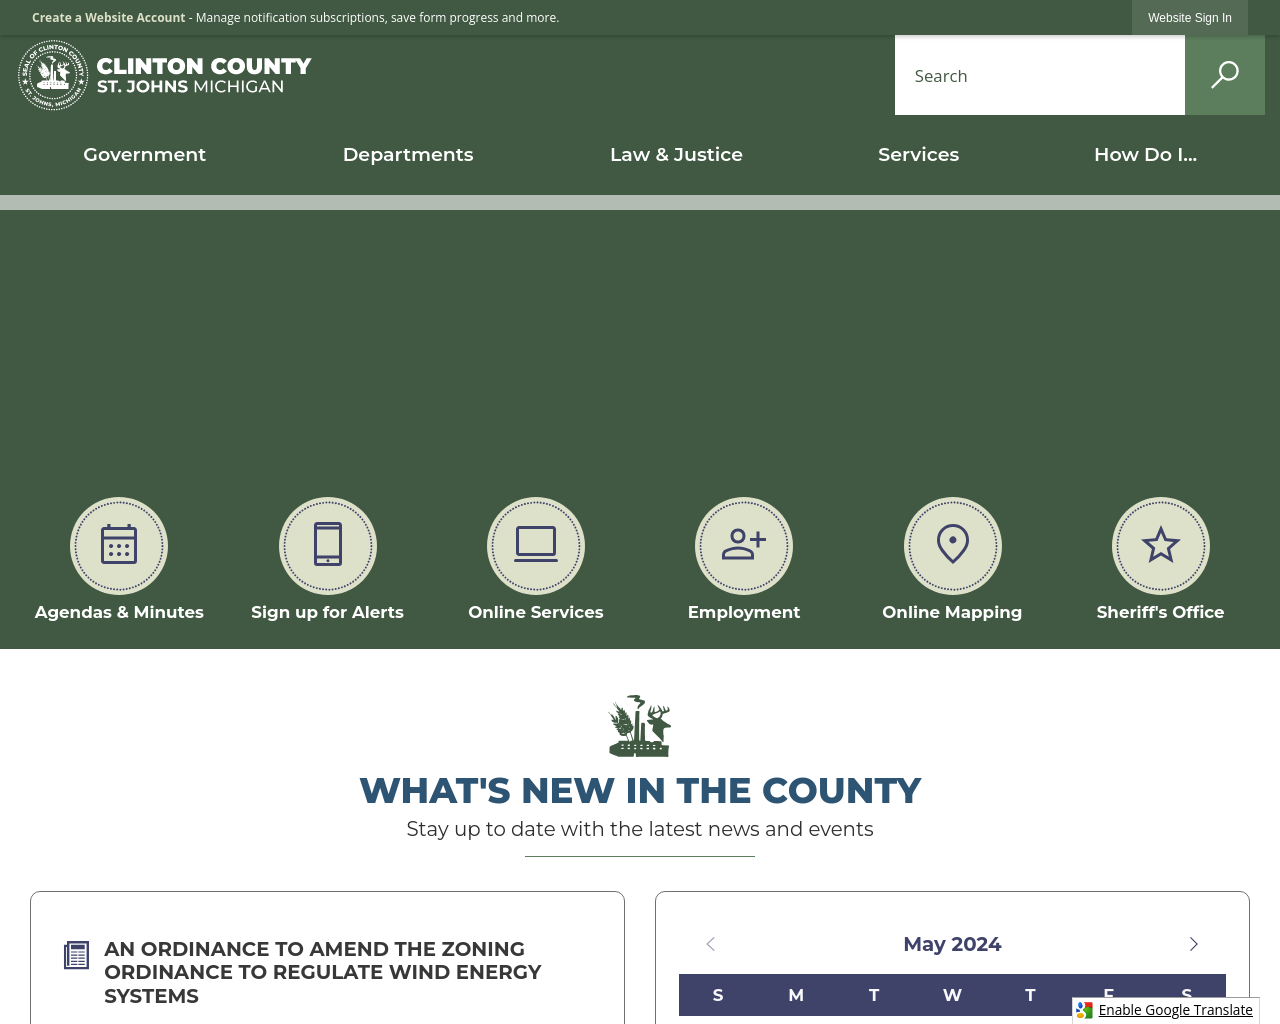 clinton-county.org